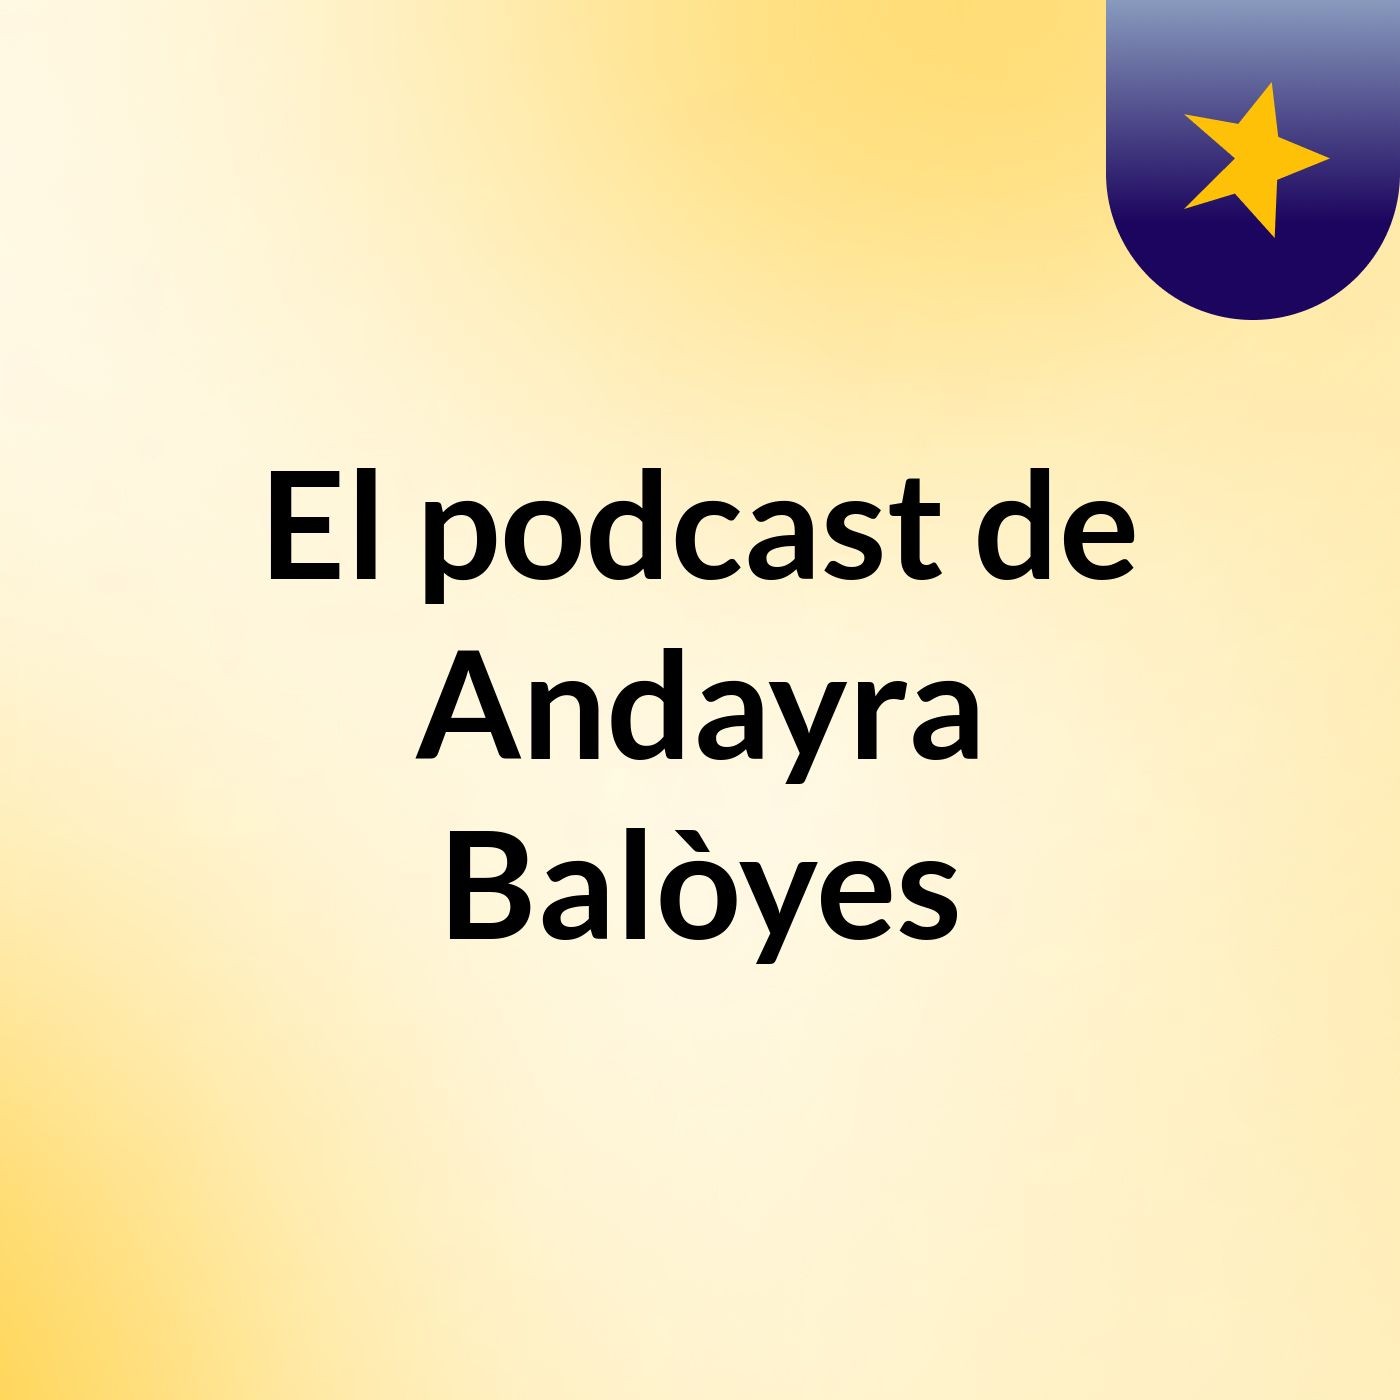 El podcast de Andayra Balòyes